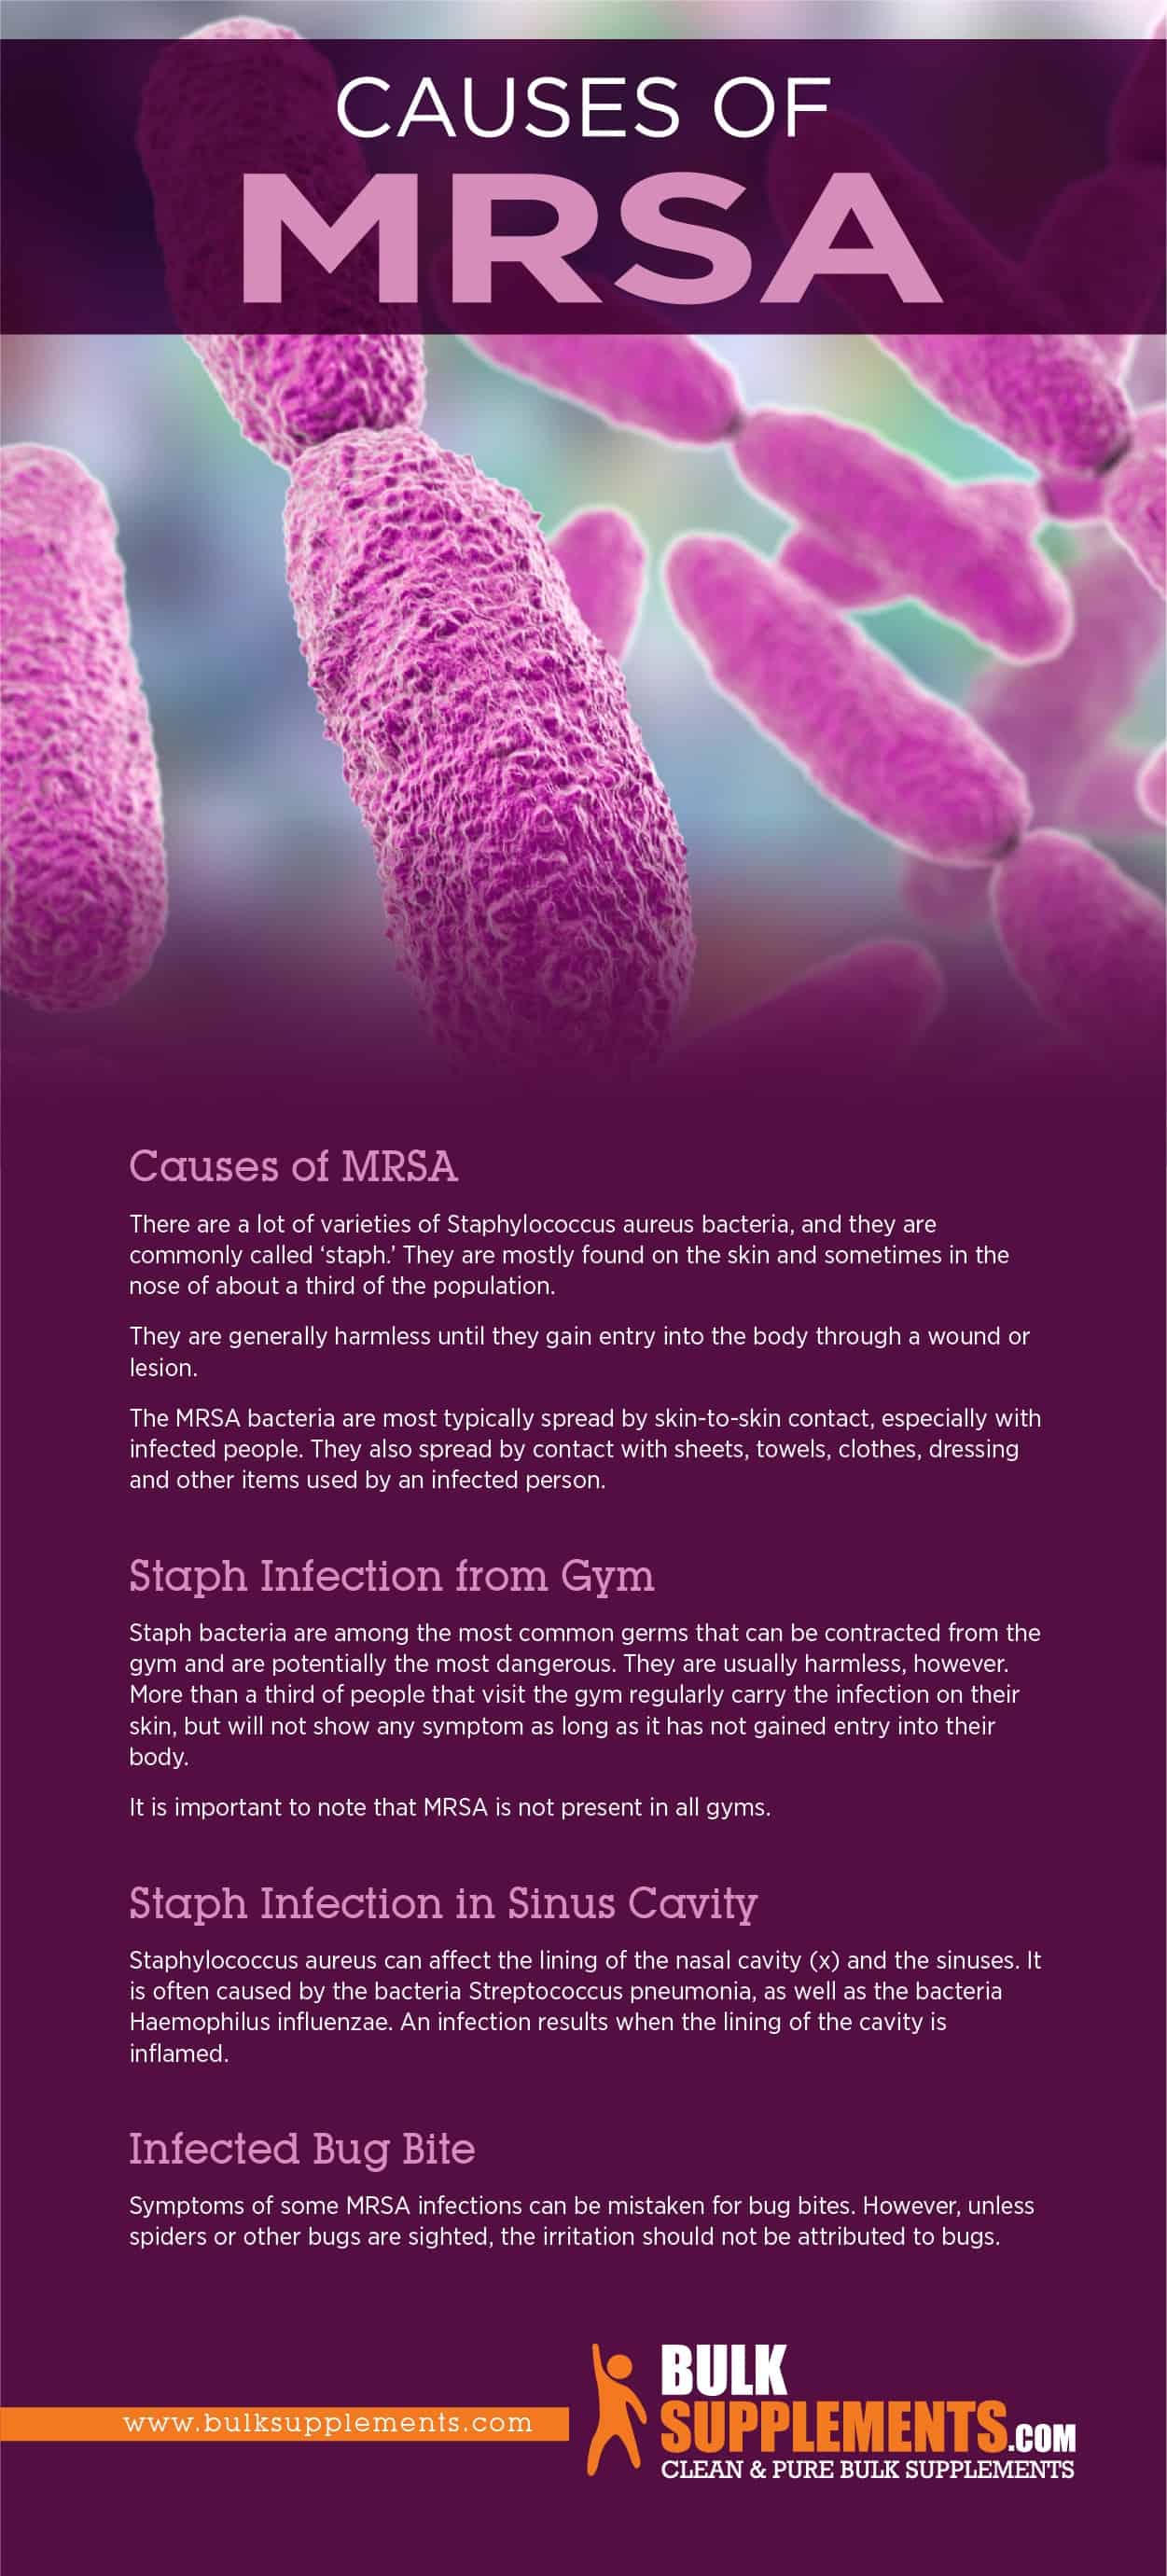 Causes of MRSA